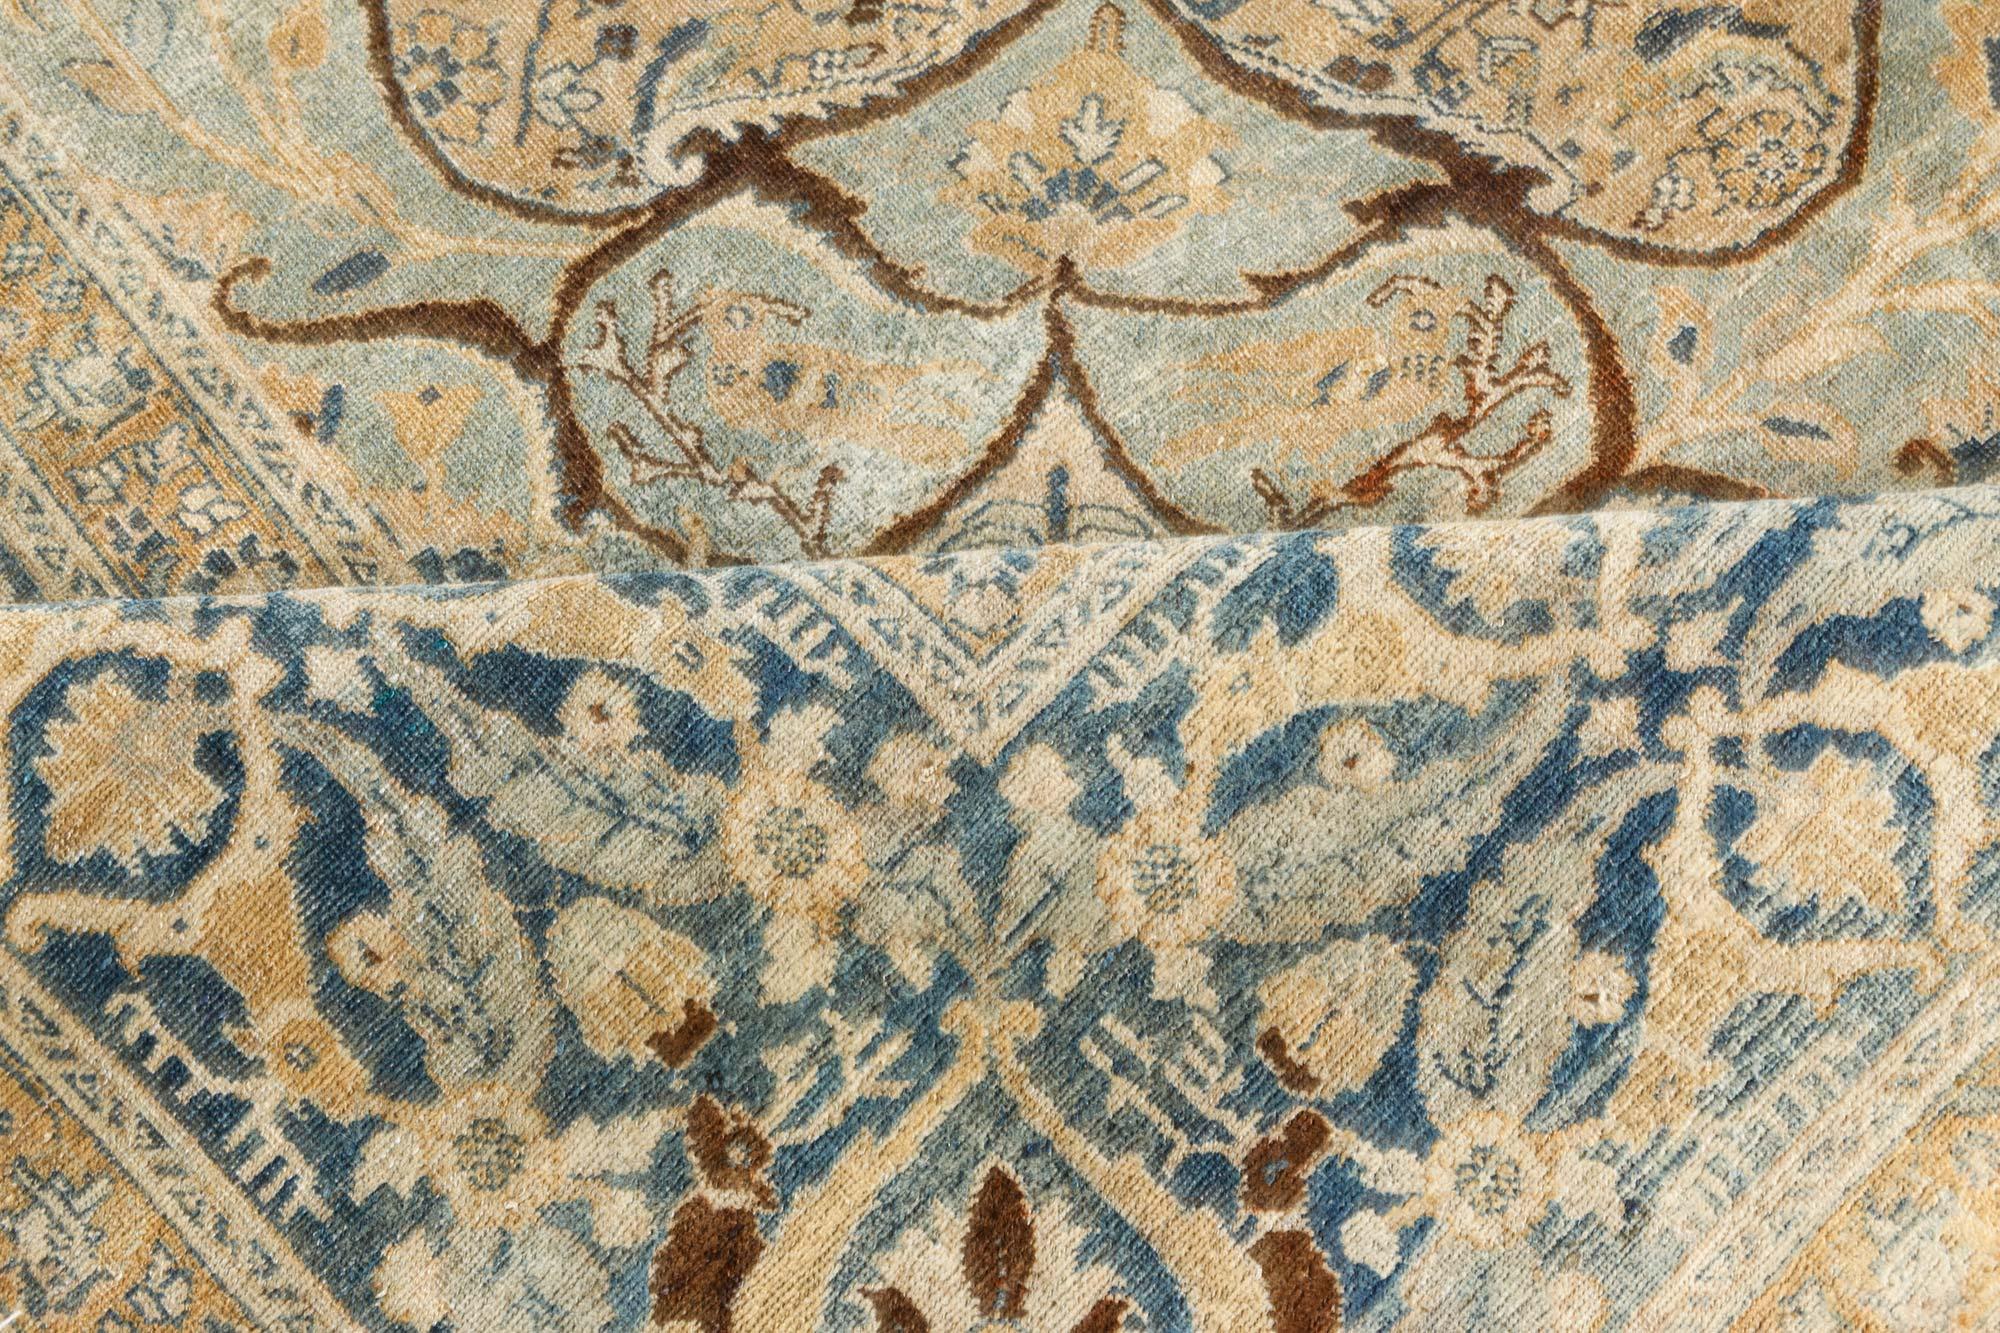 Fine Antique Persian Tabriz Handmade Wool Rug
Size: 11'10